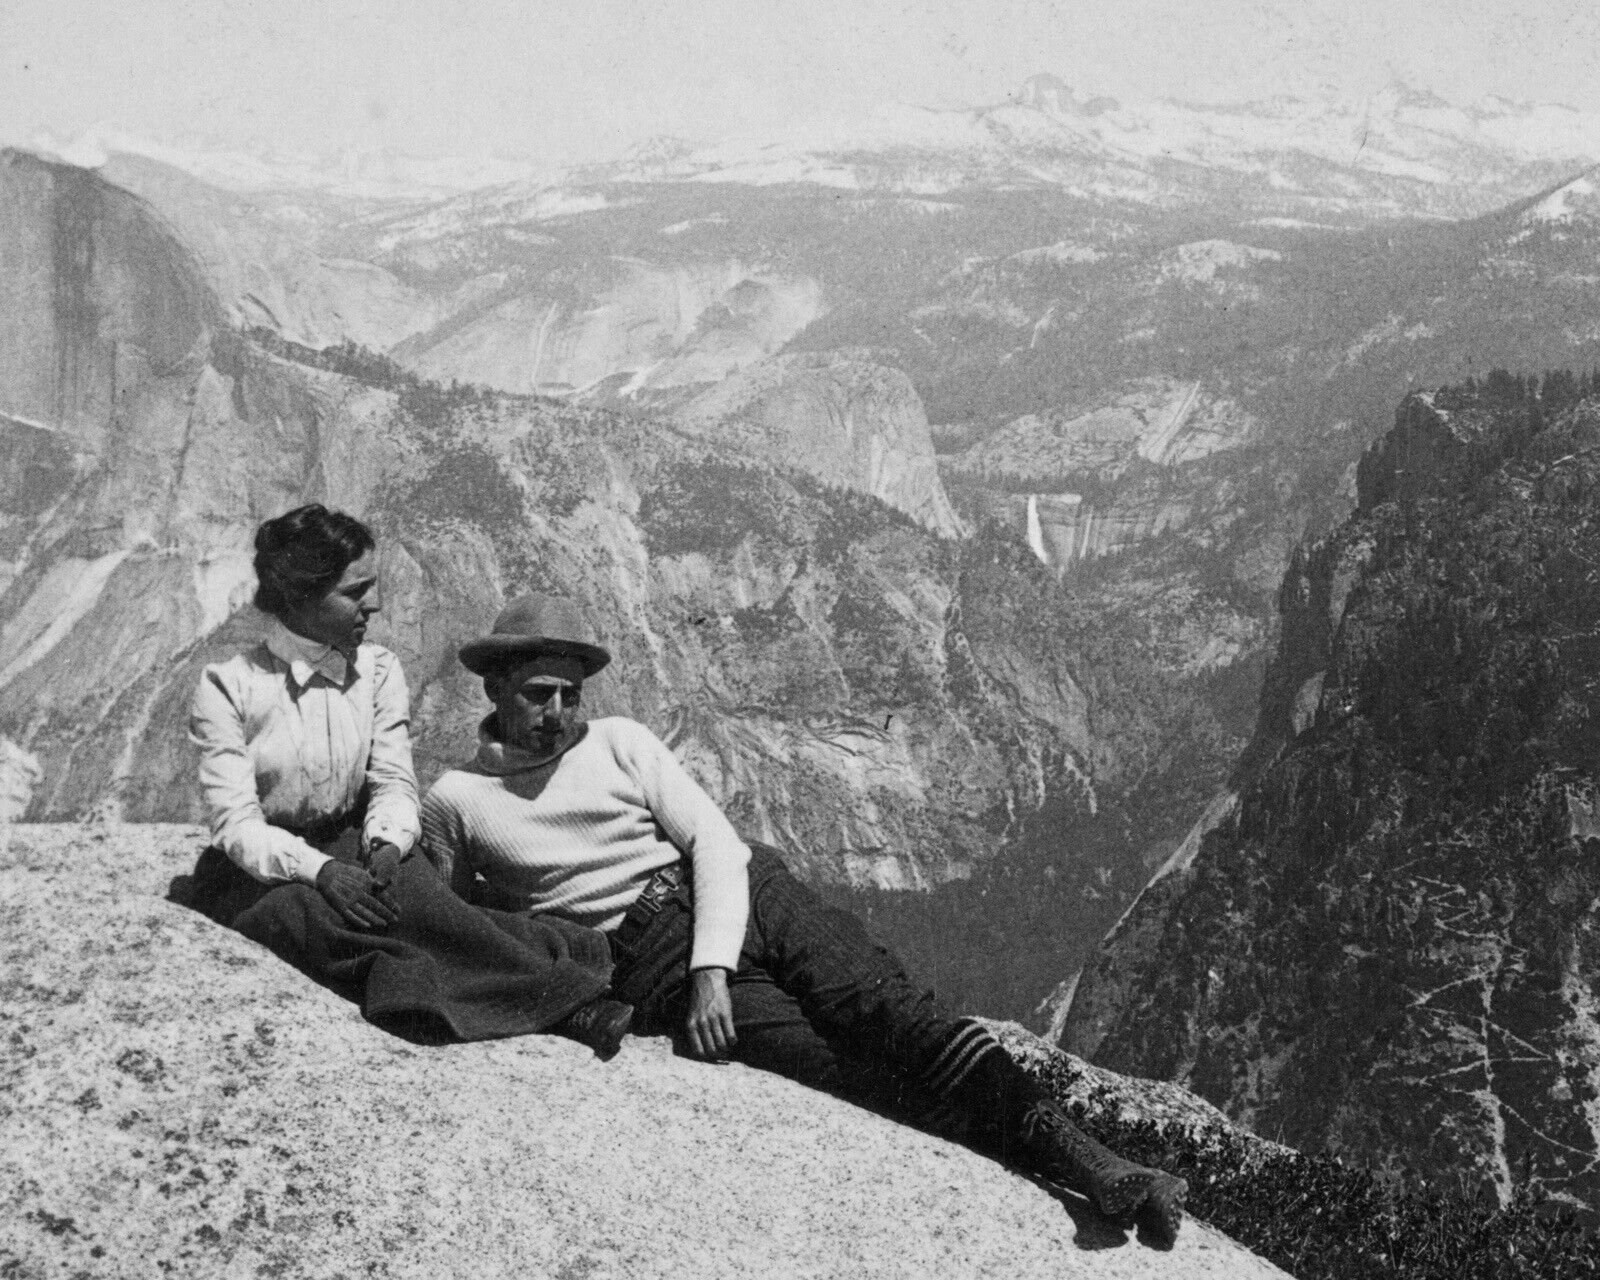 8x10 Glossy B&W Art Print 1902 Couple On Eagle Peak, Yosemite, California